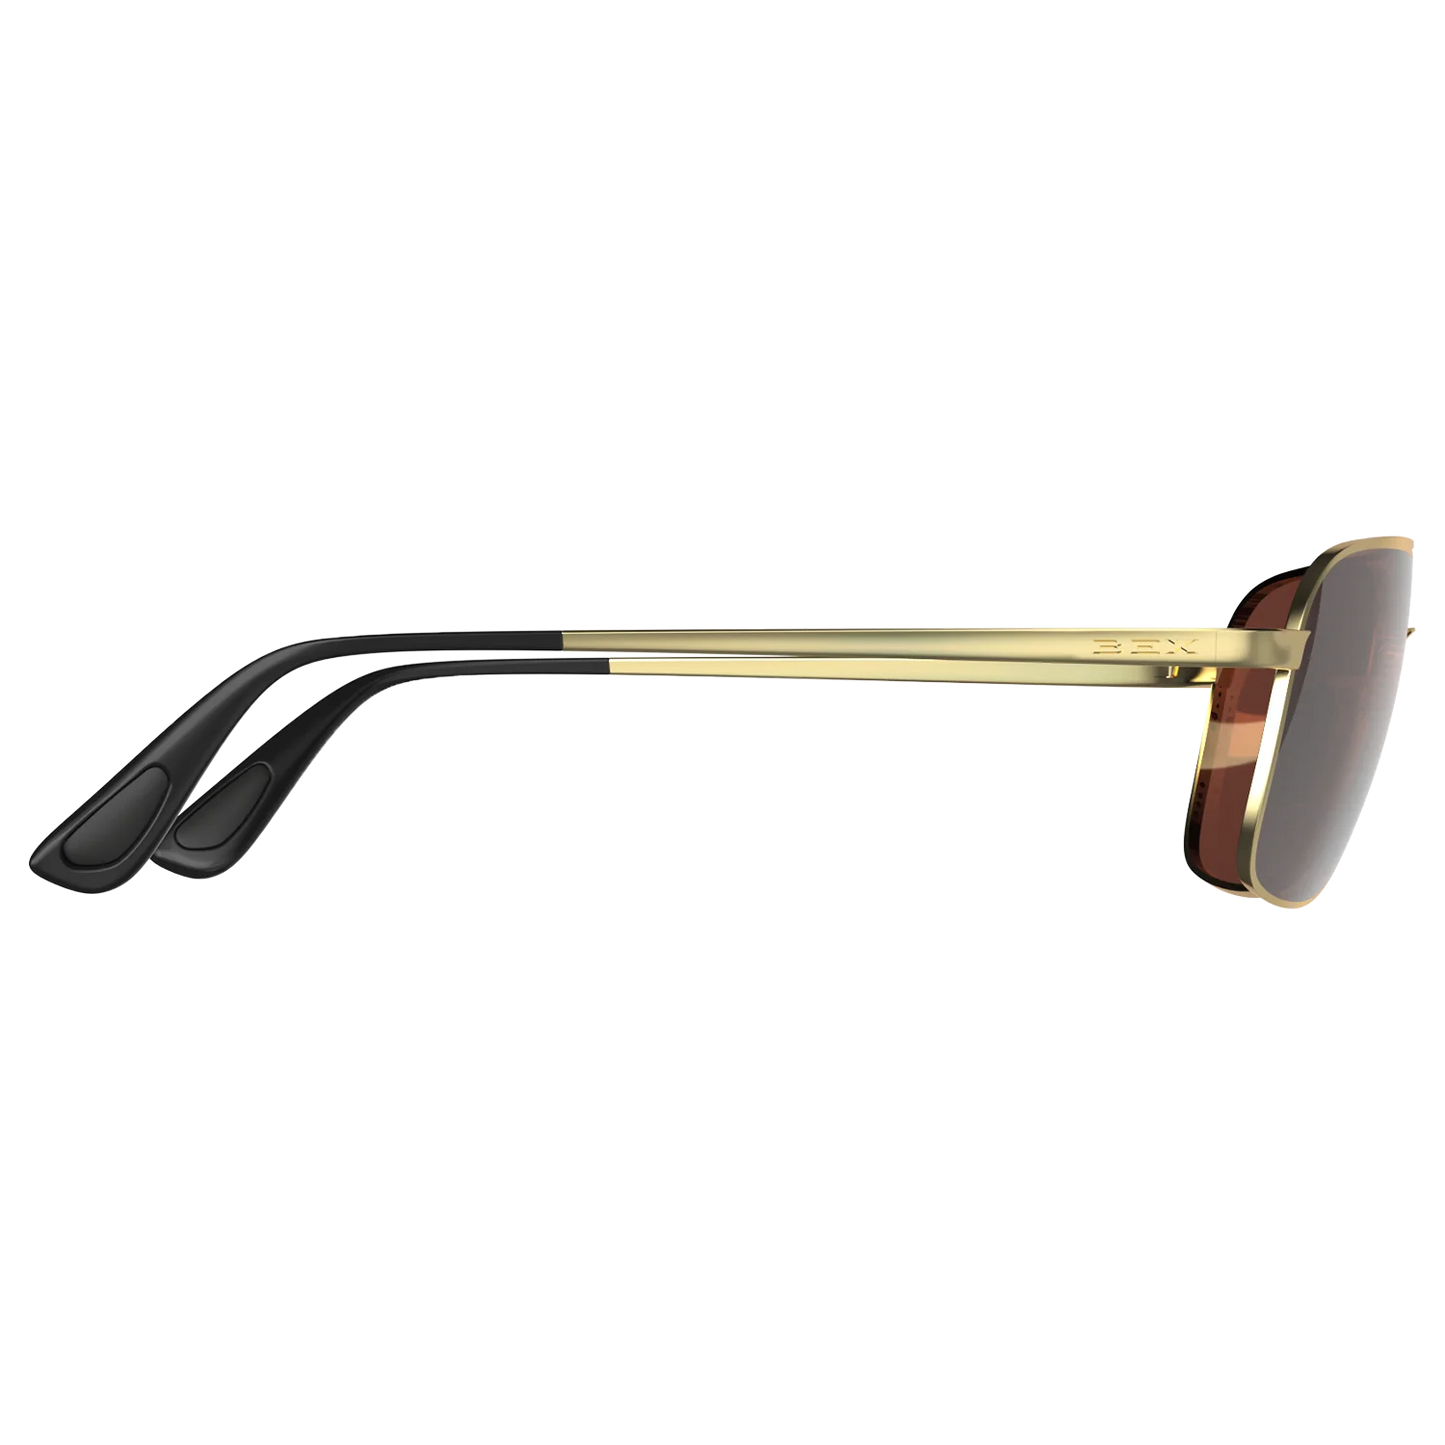 The Mach Bex Sunglasses